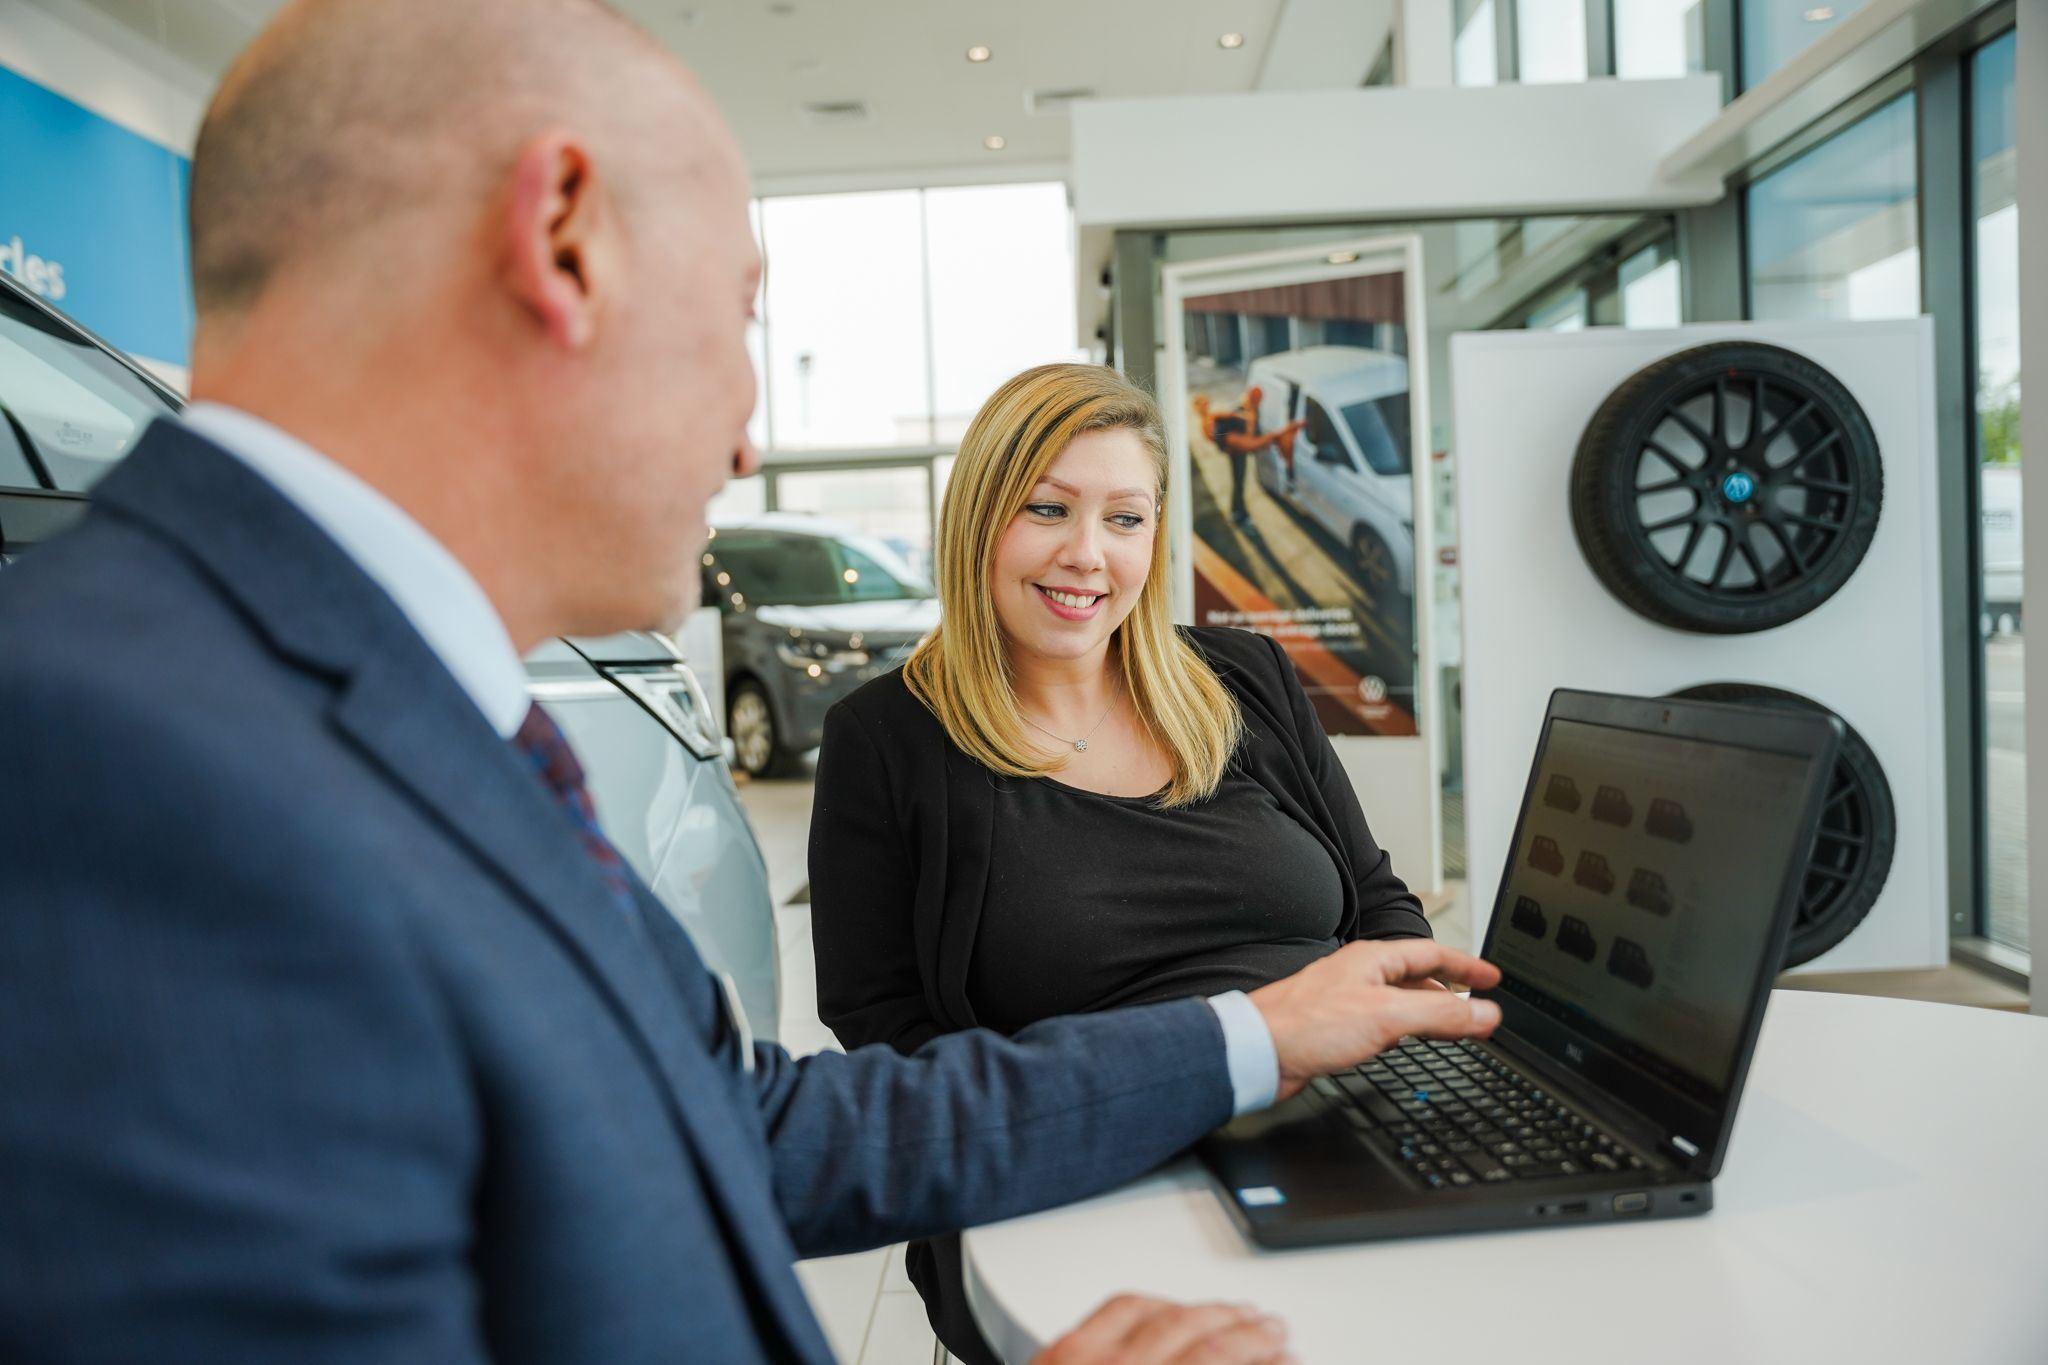 Volkswagen Commercials Sales Advisor discusses potential warranty options with customer